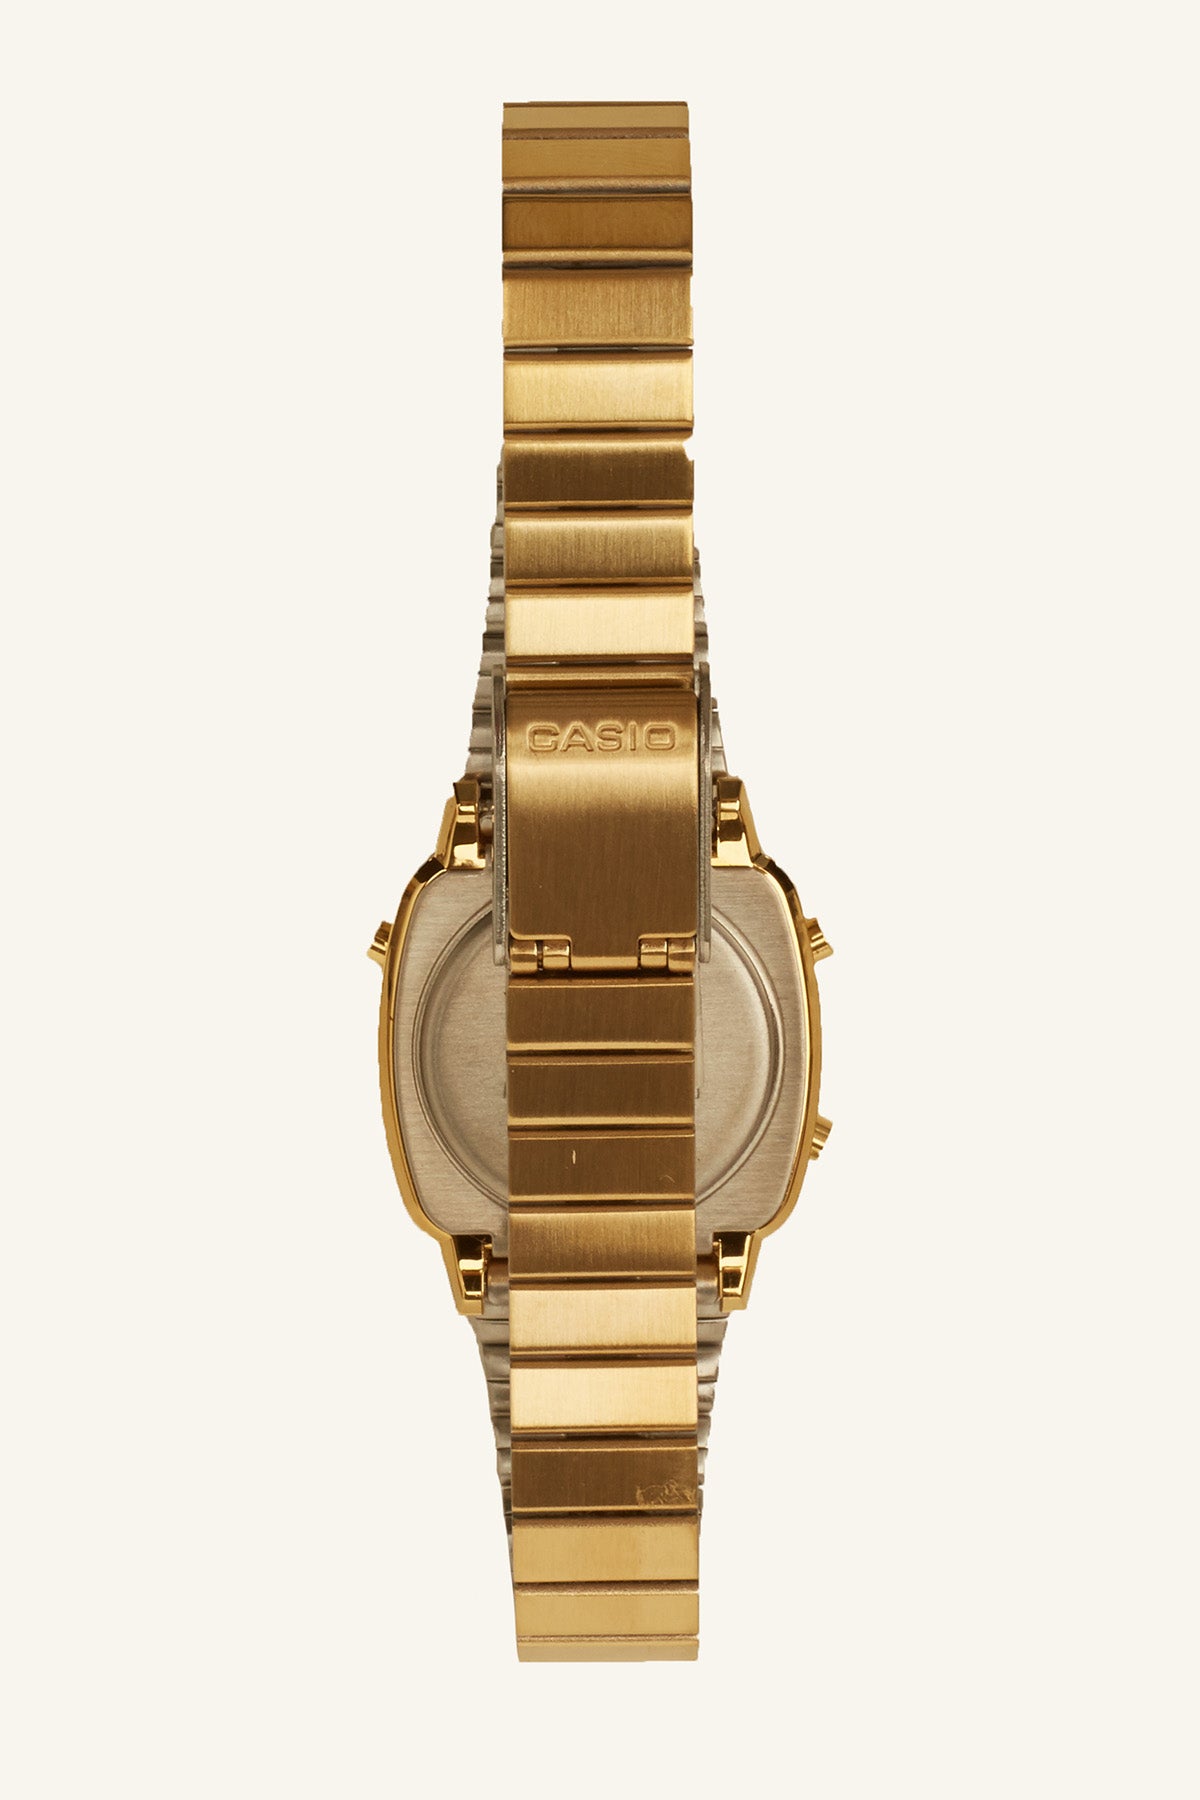 Casio LA670WGA Digital Watch Gold/Gold